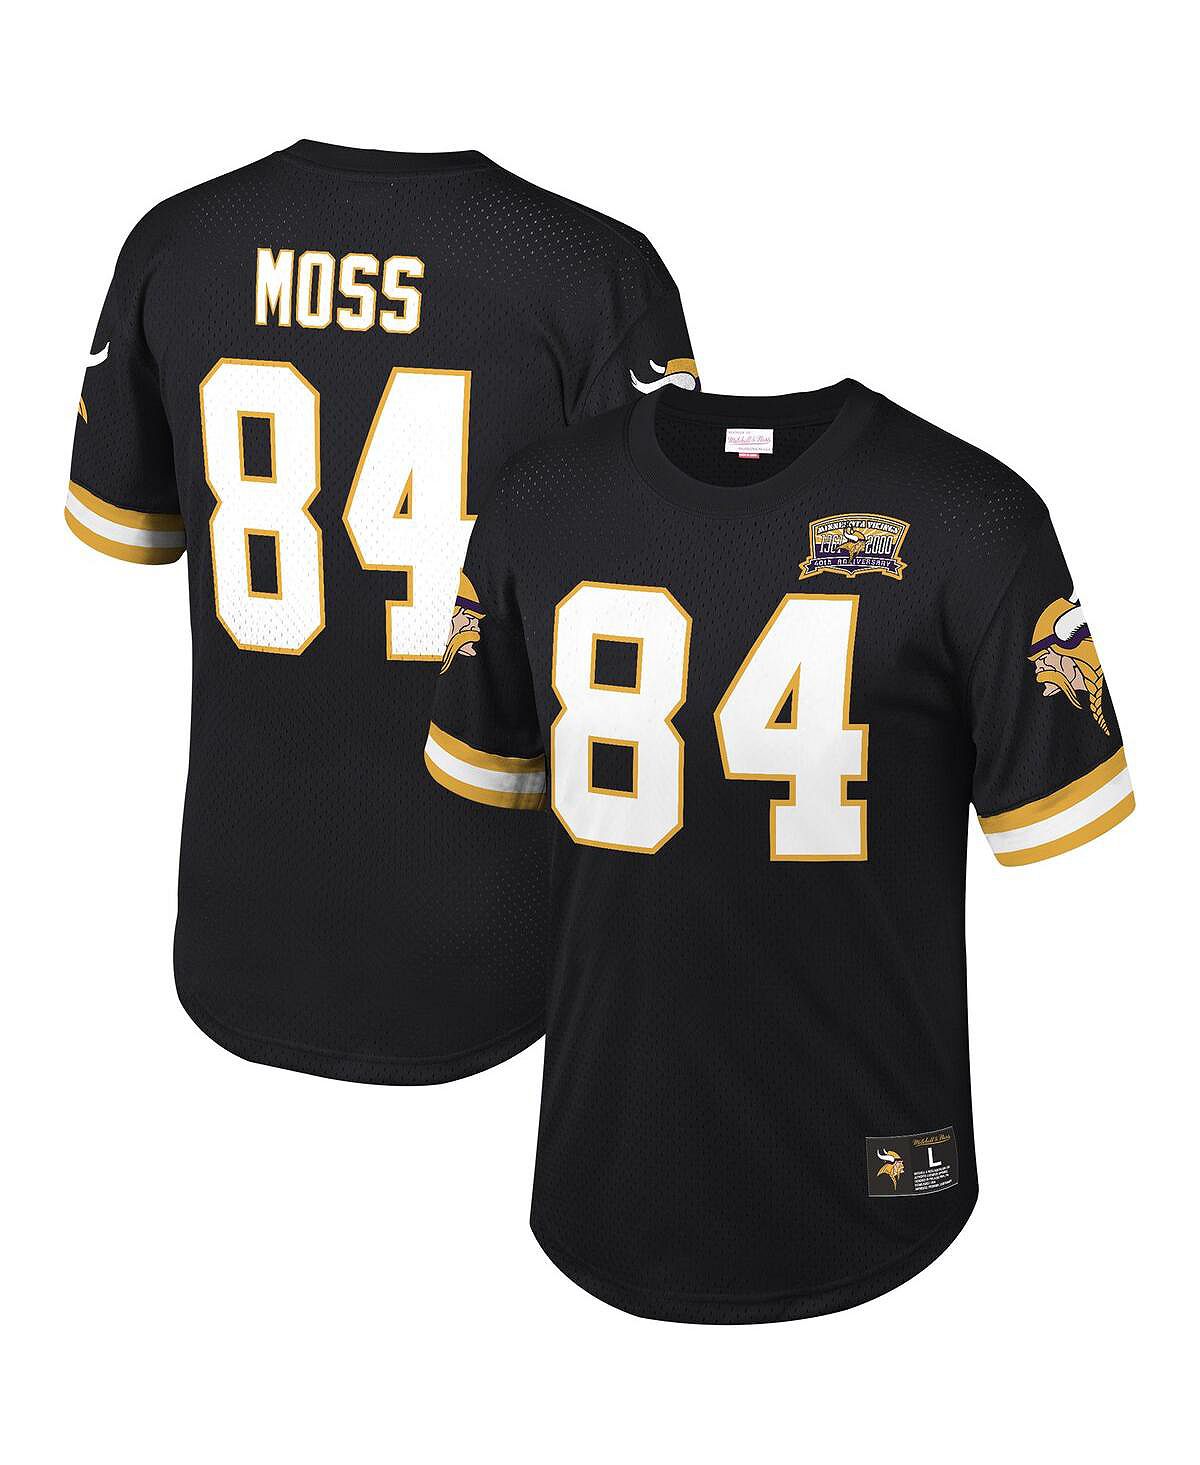 Мужская футболка с именем и номером игрока Randy Moss Black Minnesota Vikings в сетку Mitchell & Ness